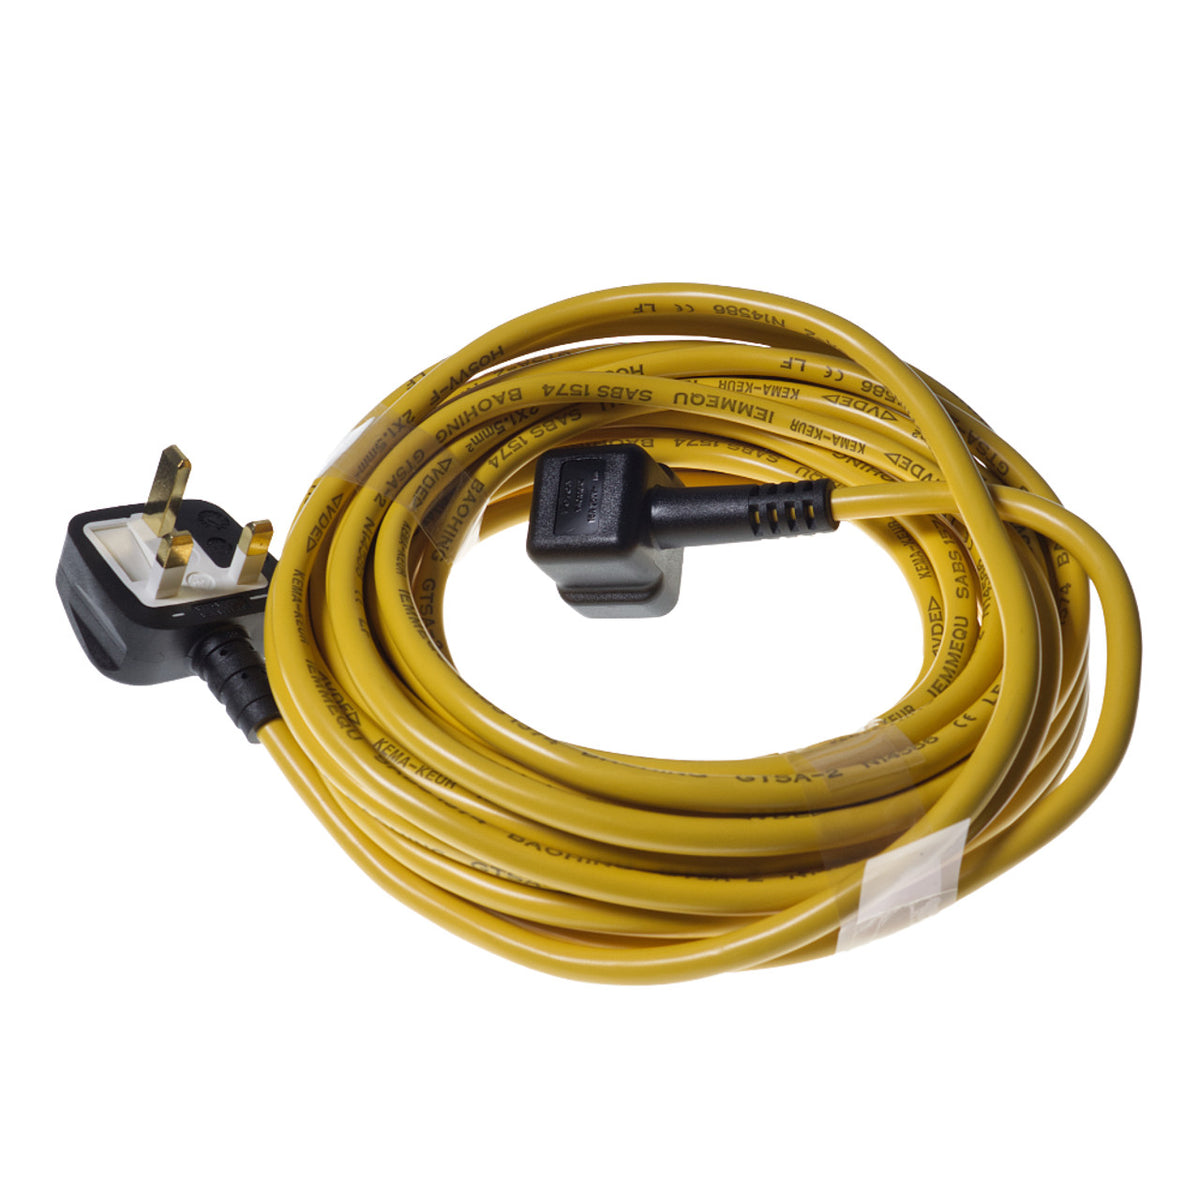 Numatic 20 Metre x 1.5mm x 3 Core Cable - TT Twintec - UK Plug (Yellow)